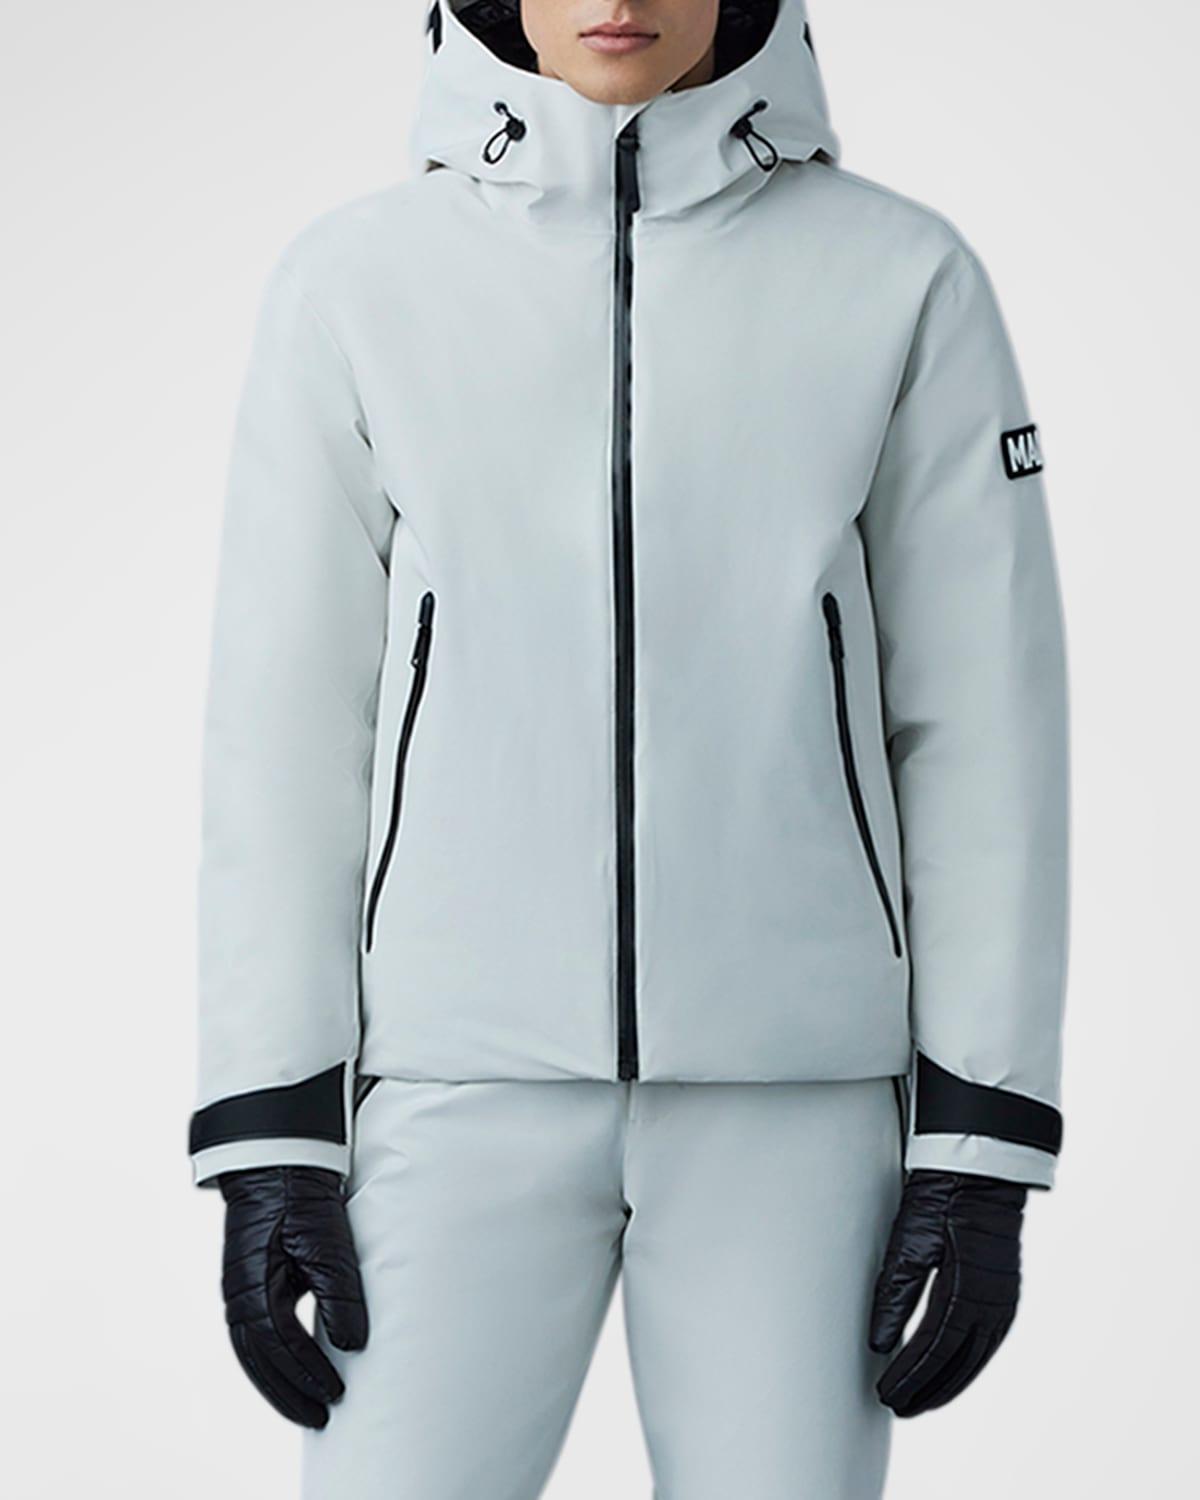 Mackage Men's Ski Performance Hooded Jacket In Porcelain Grey